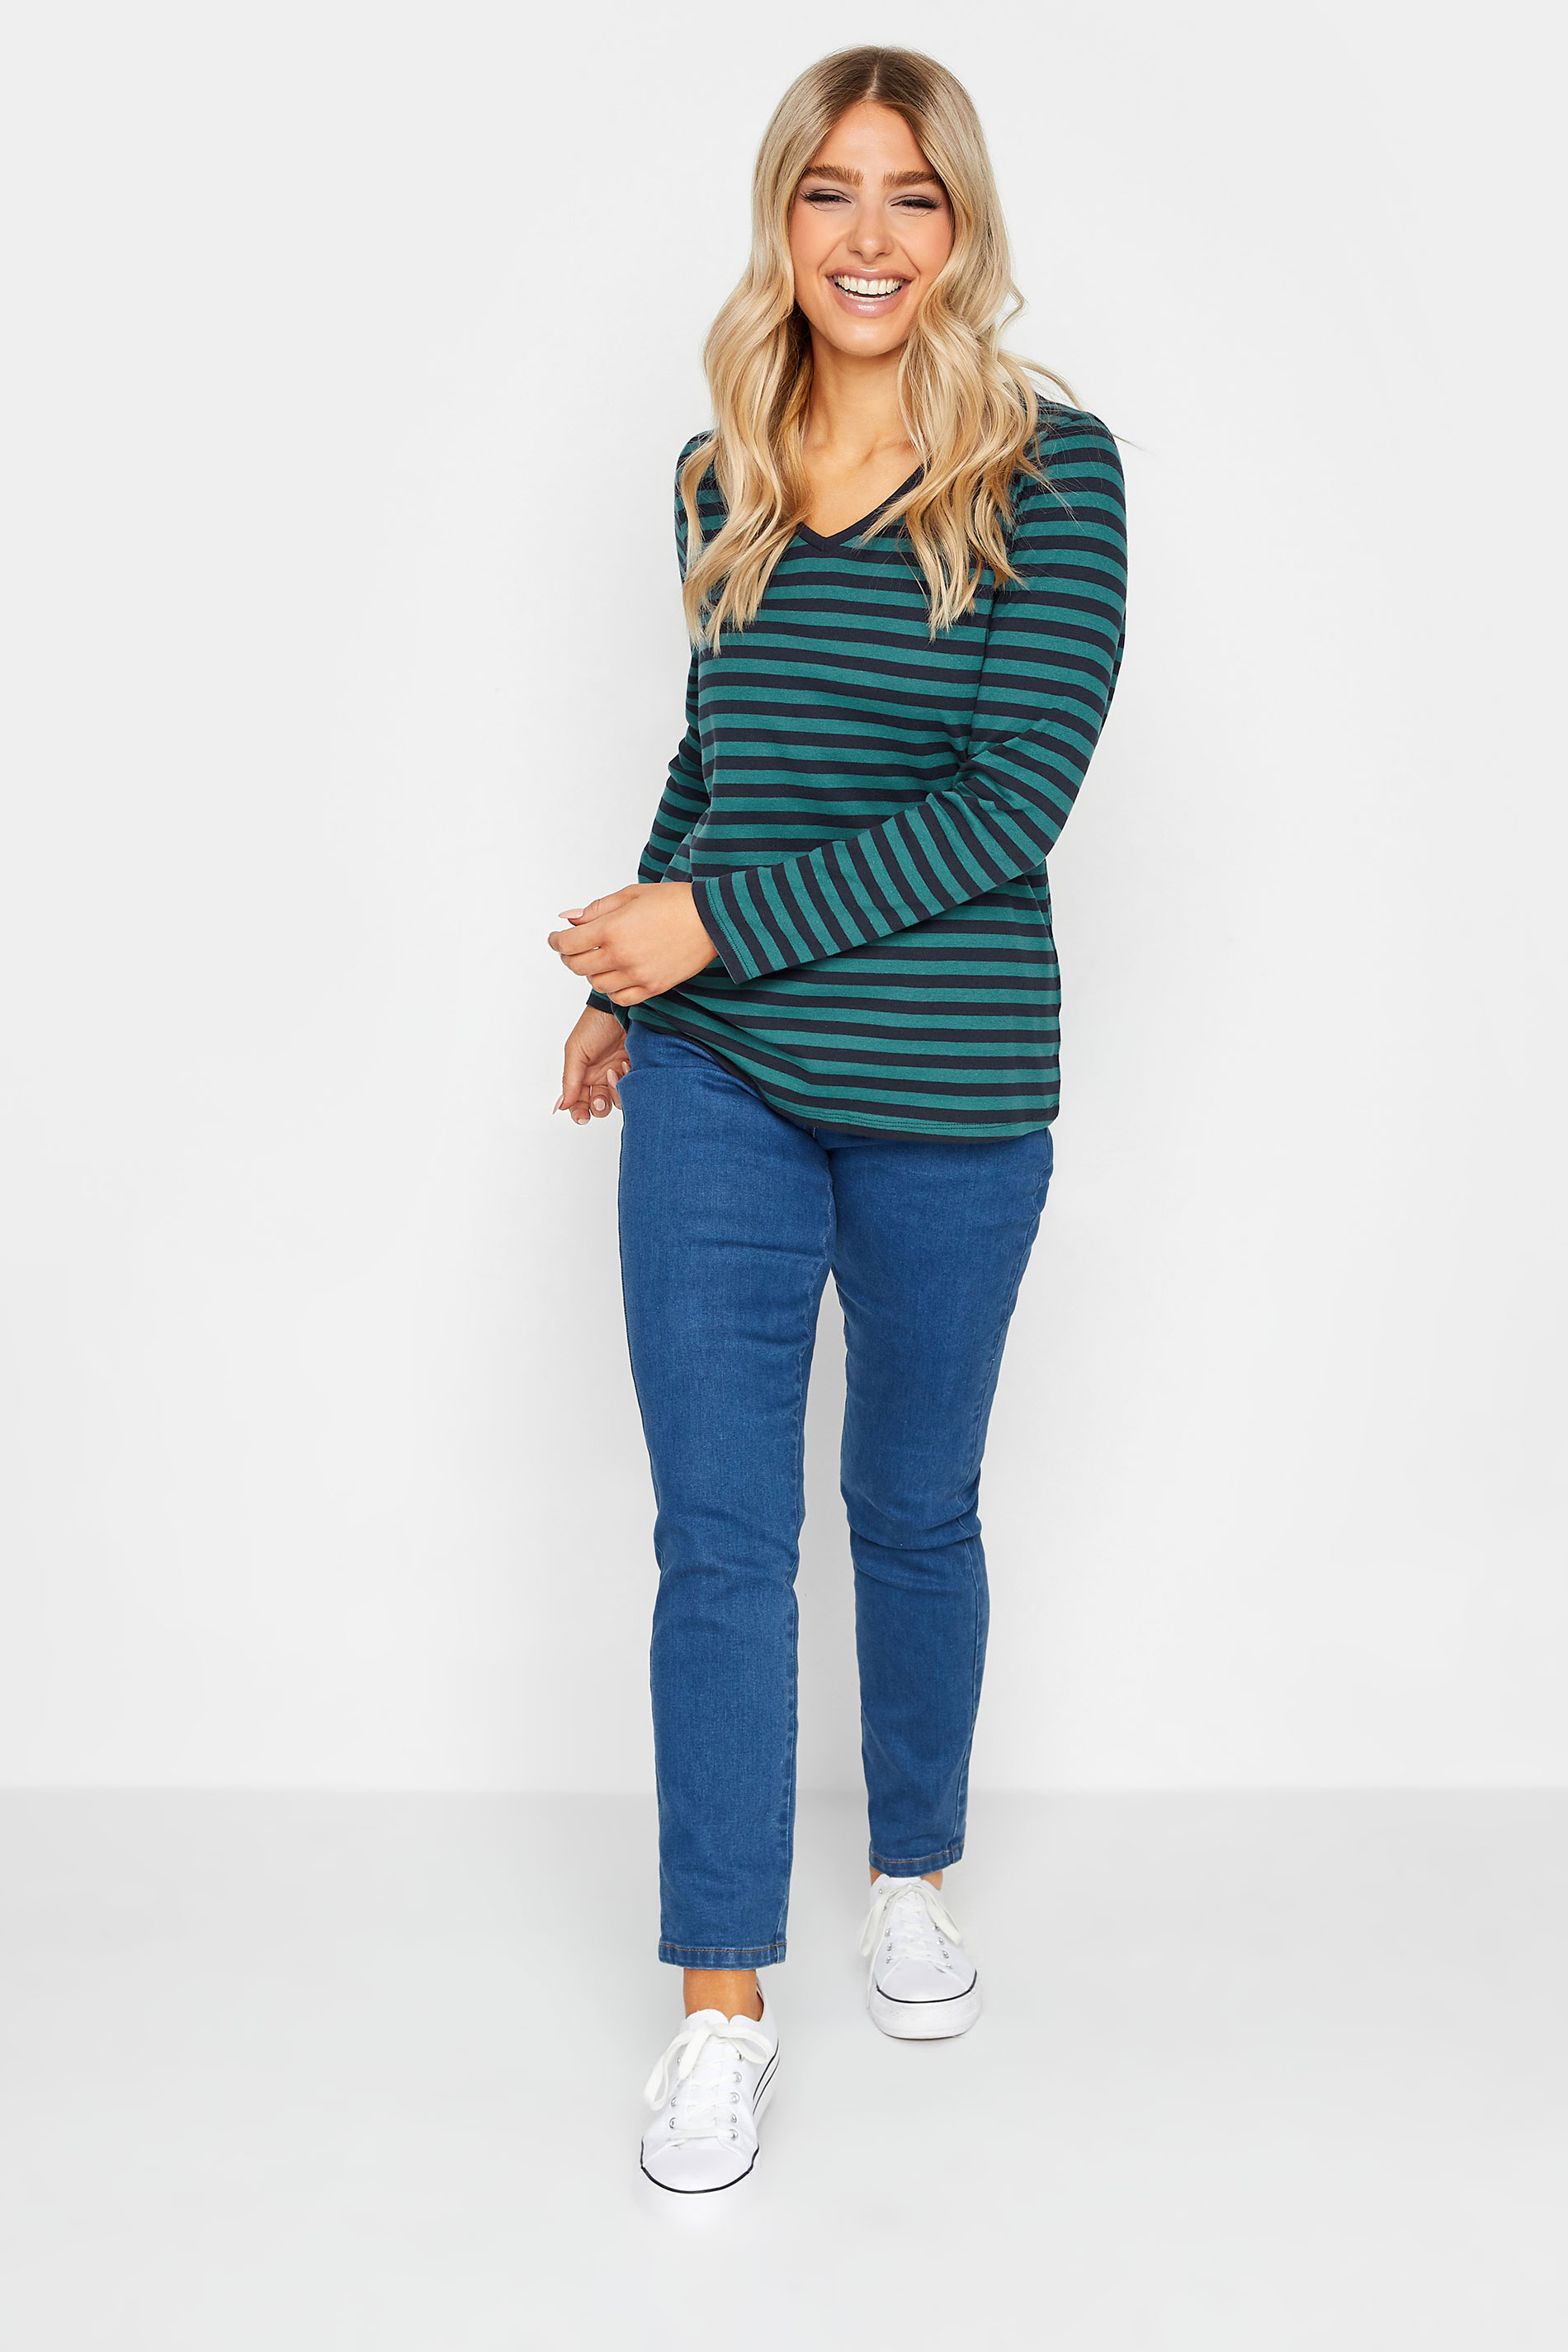 M&Co Teal Blue Stripe V-Neck Long Sleeve Cotton T-Shirt | M&Co 3